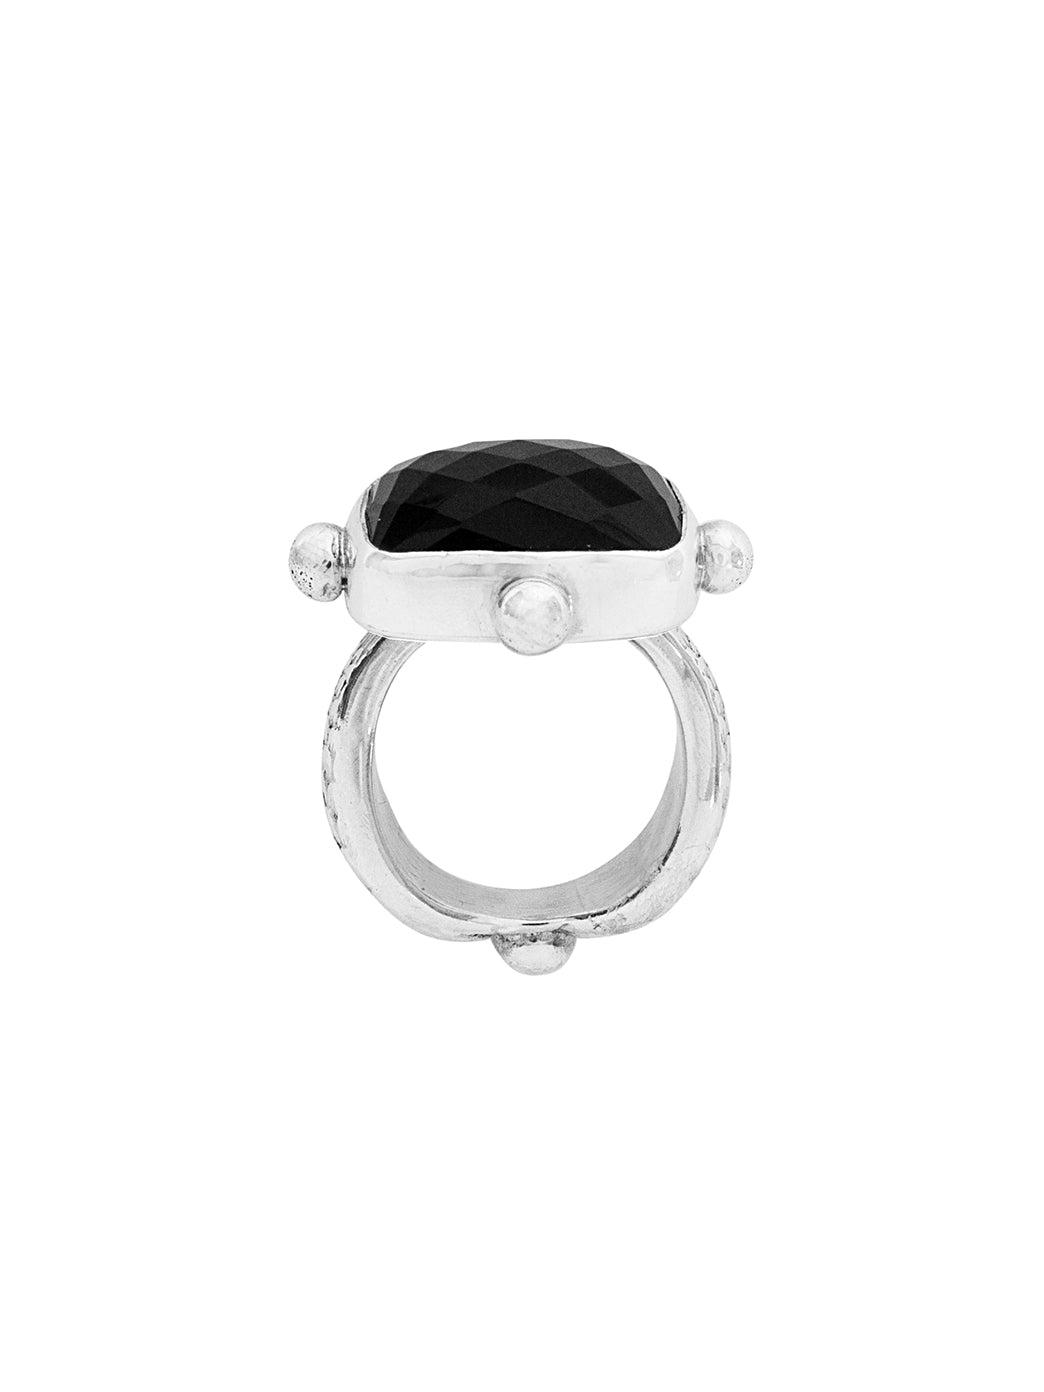 Fiorina Jewellery Rectangle Fishband Ring Black Onyx Shank View